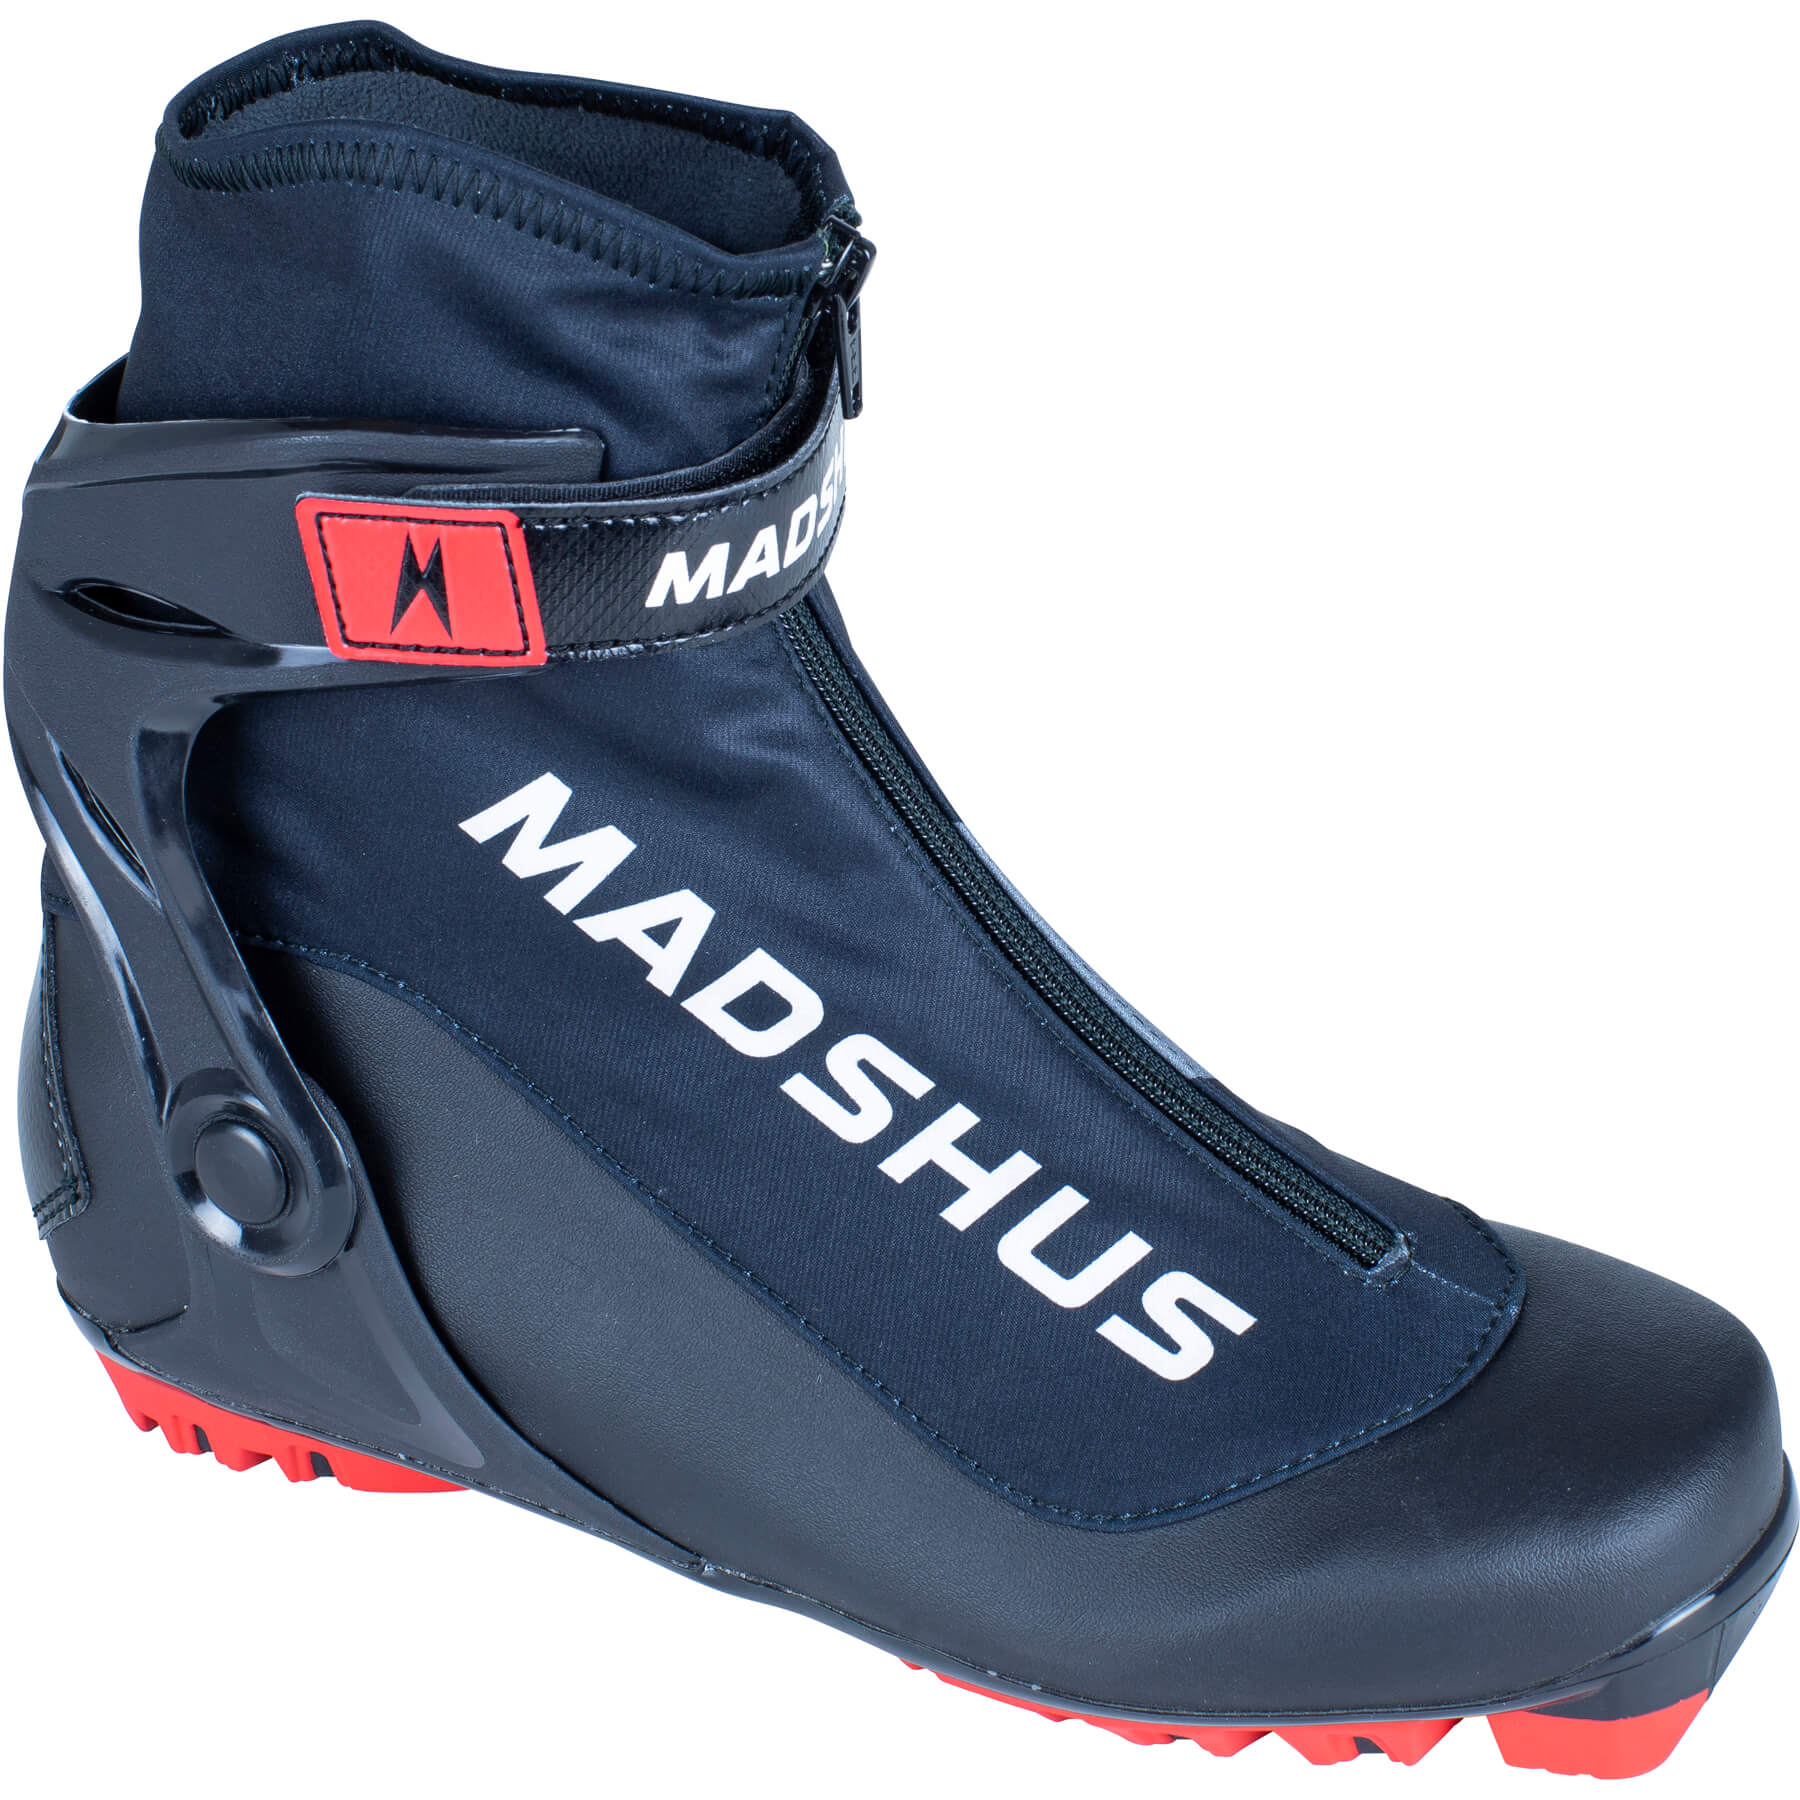 Madshus Endurace Skate Boot